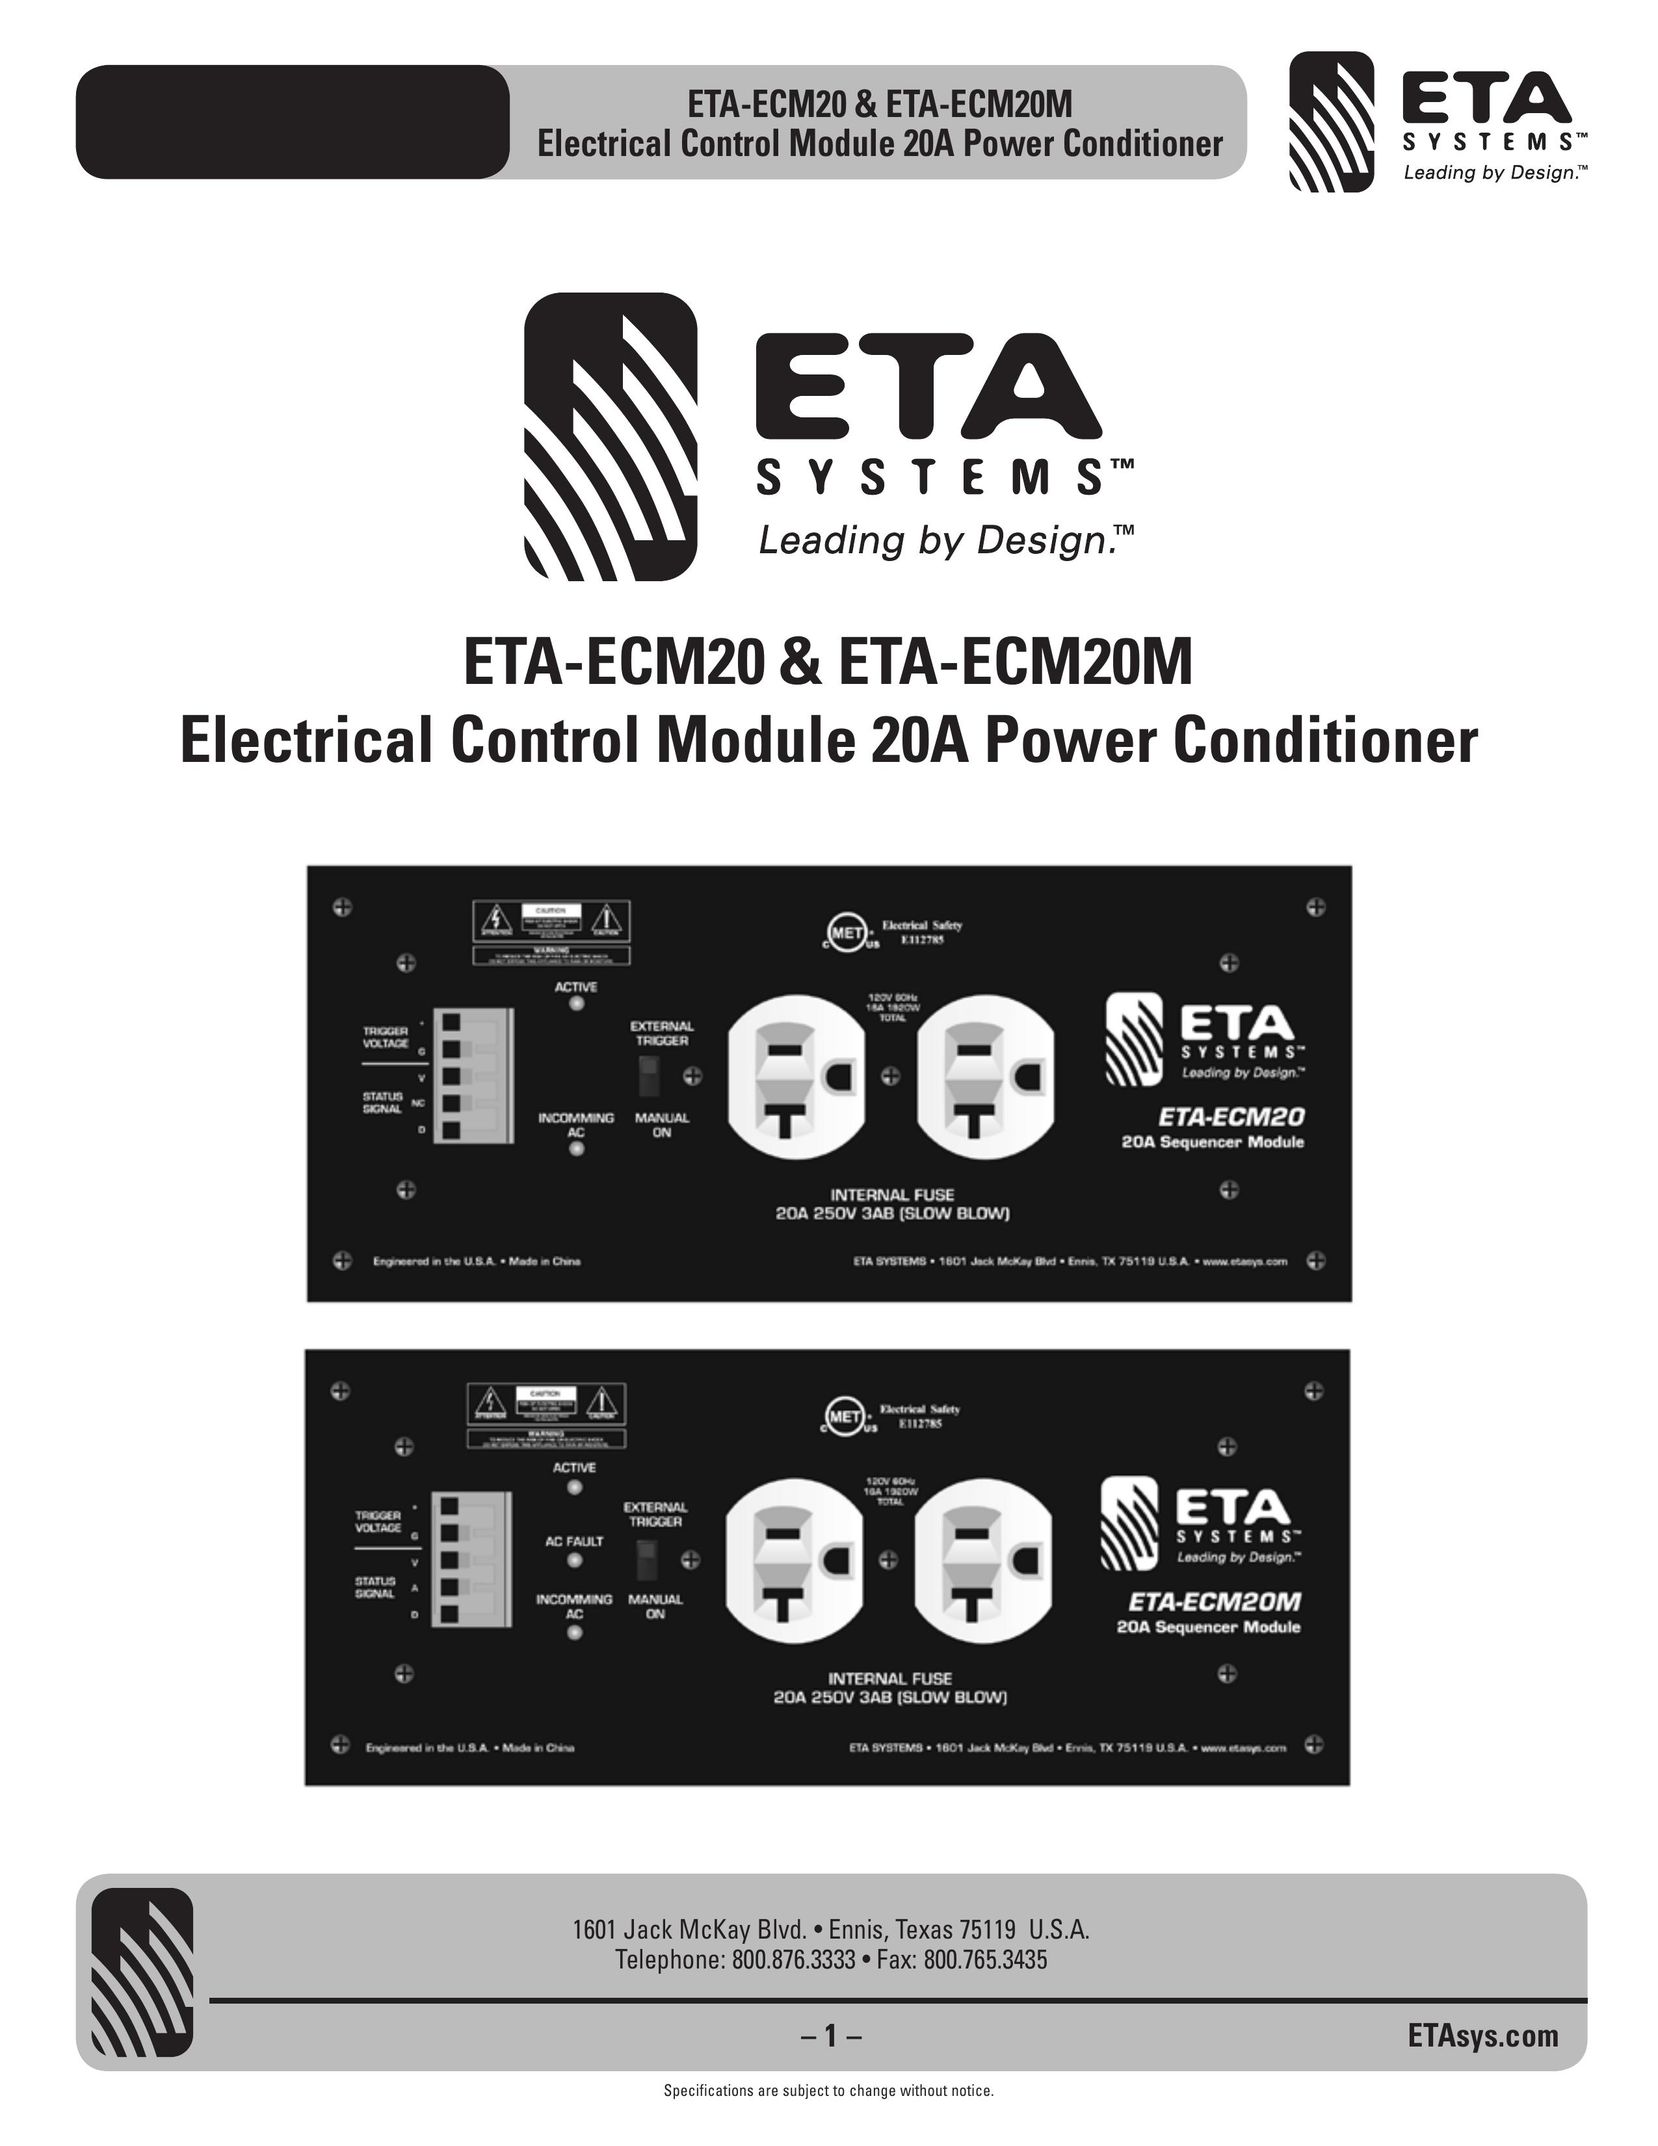 ETA Systems ETA-ECM20M Power Supply User Manual